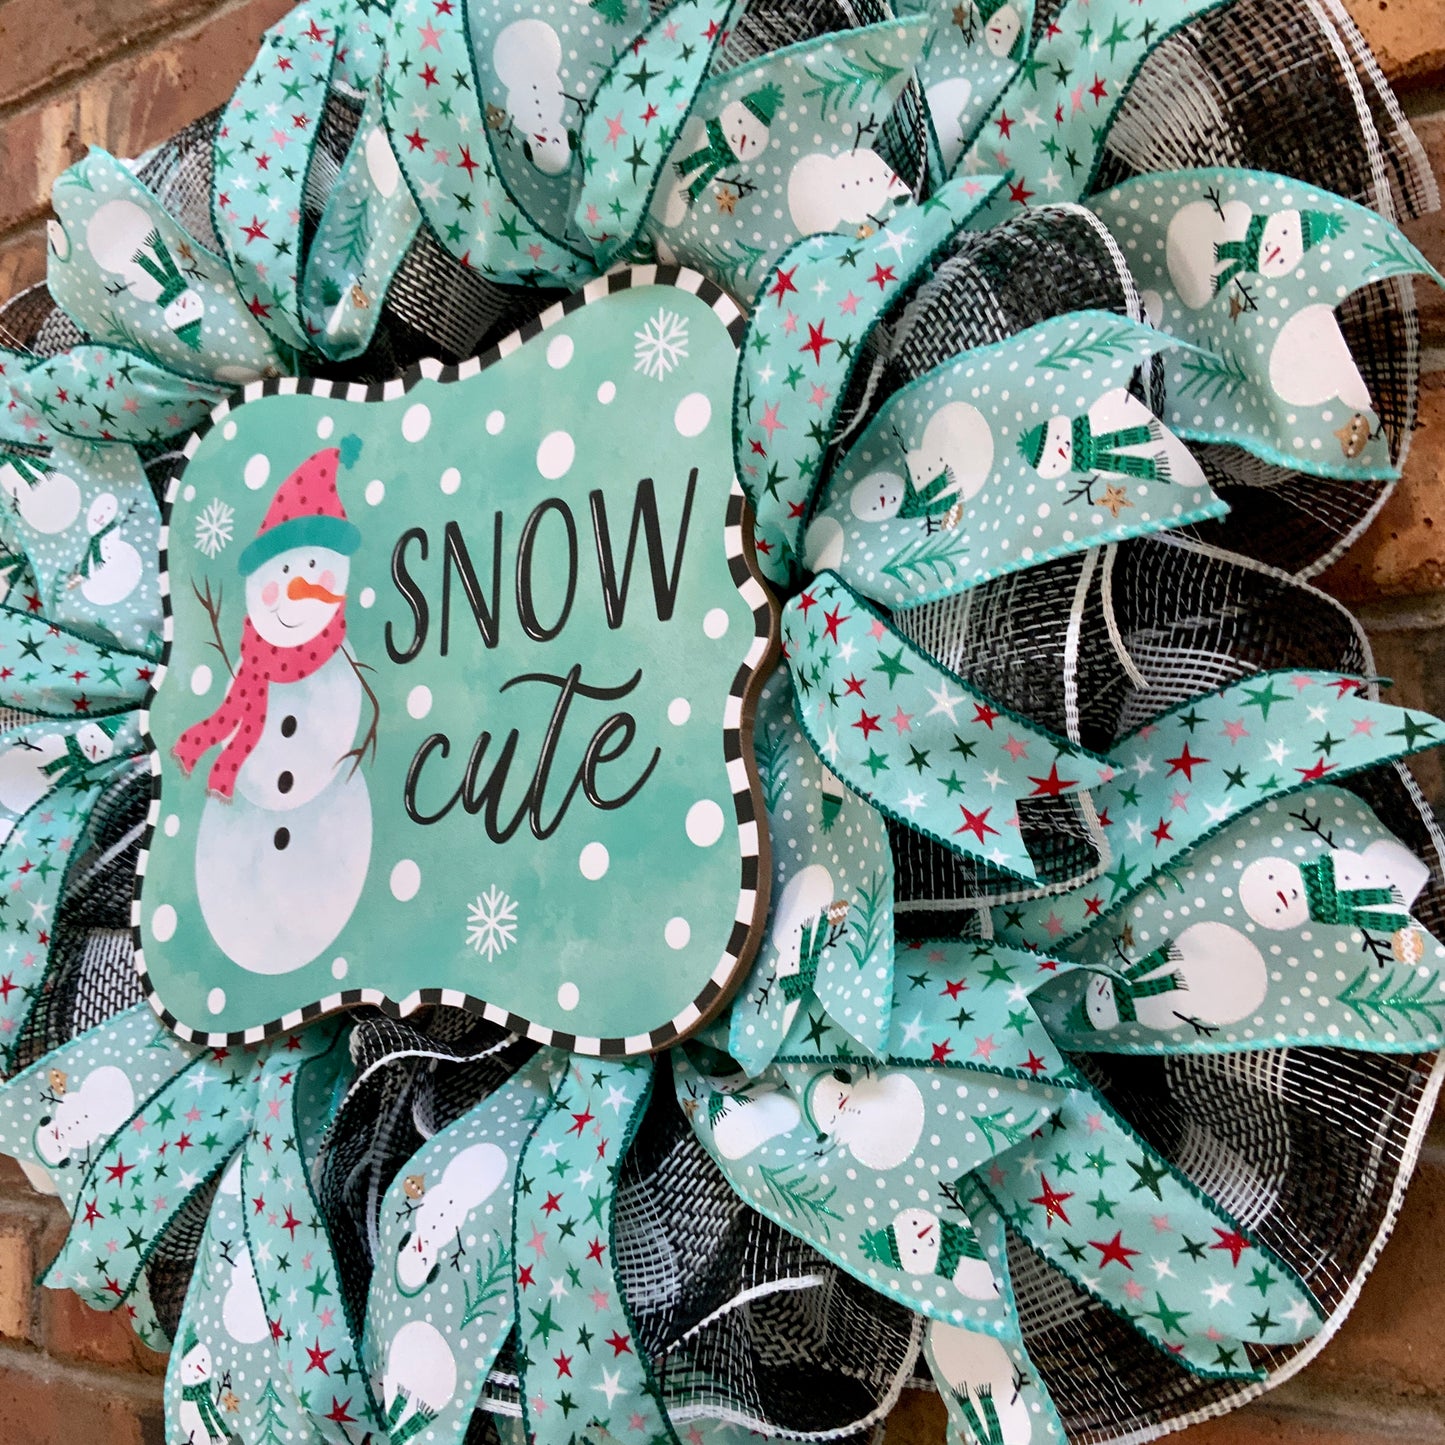 Snowman Wreath, Snowman Pancake Wreath, Winter Wreath, Winter Pancake Wreath, Winter Not Christmas Wreath, Winter Snowman Wreath